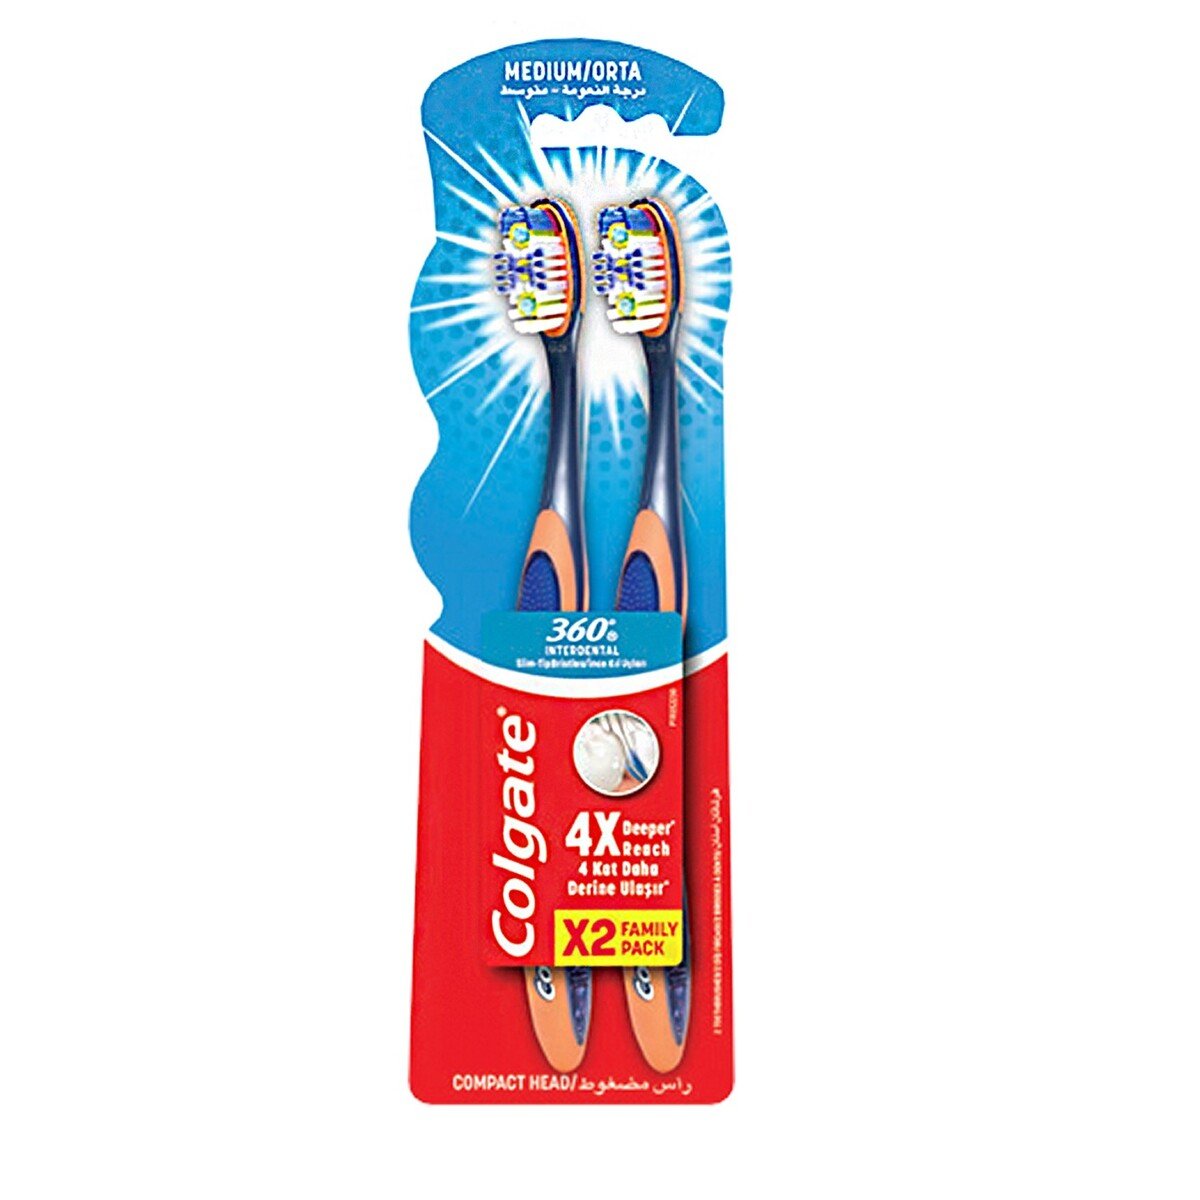 Colgate 360 Interdental Medium Toothbrush 2 pcs